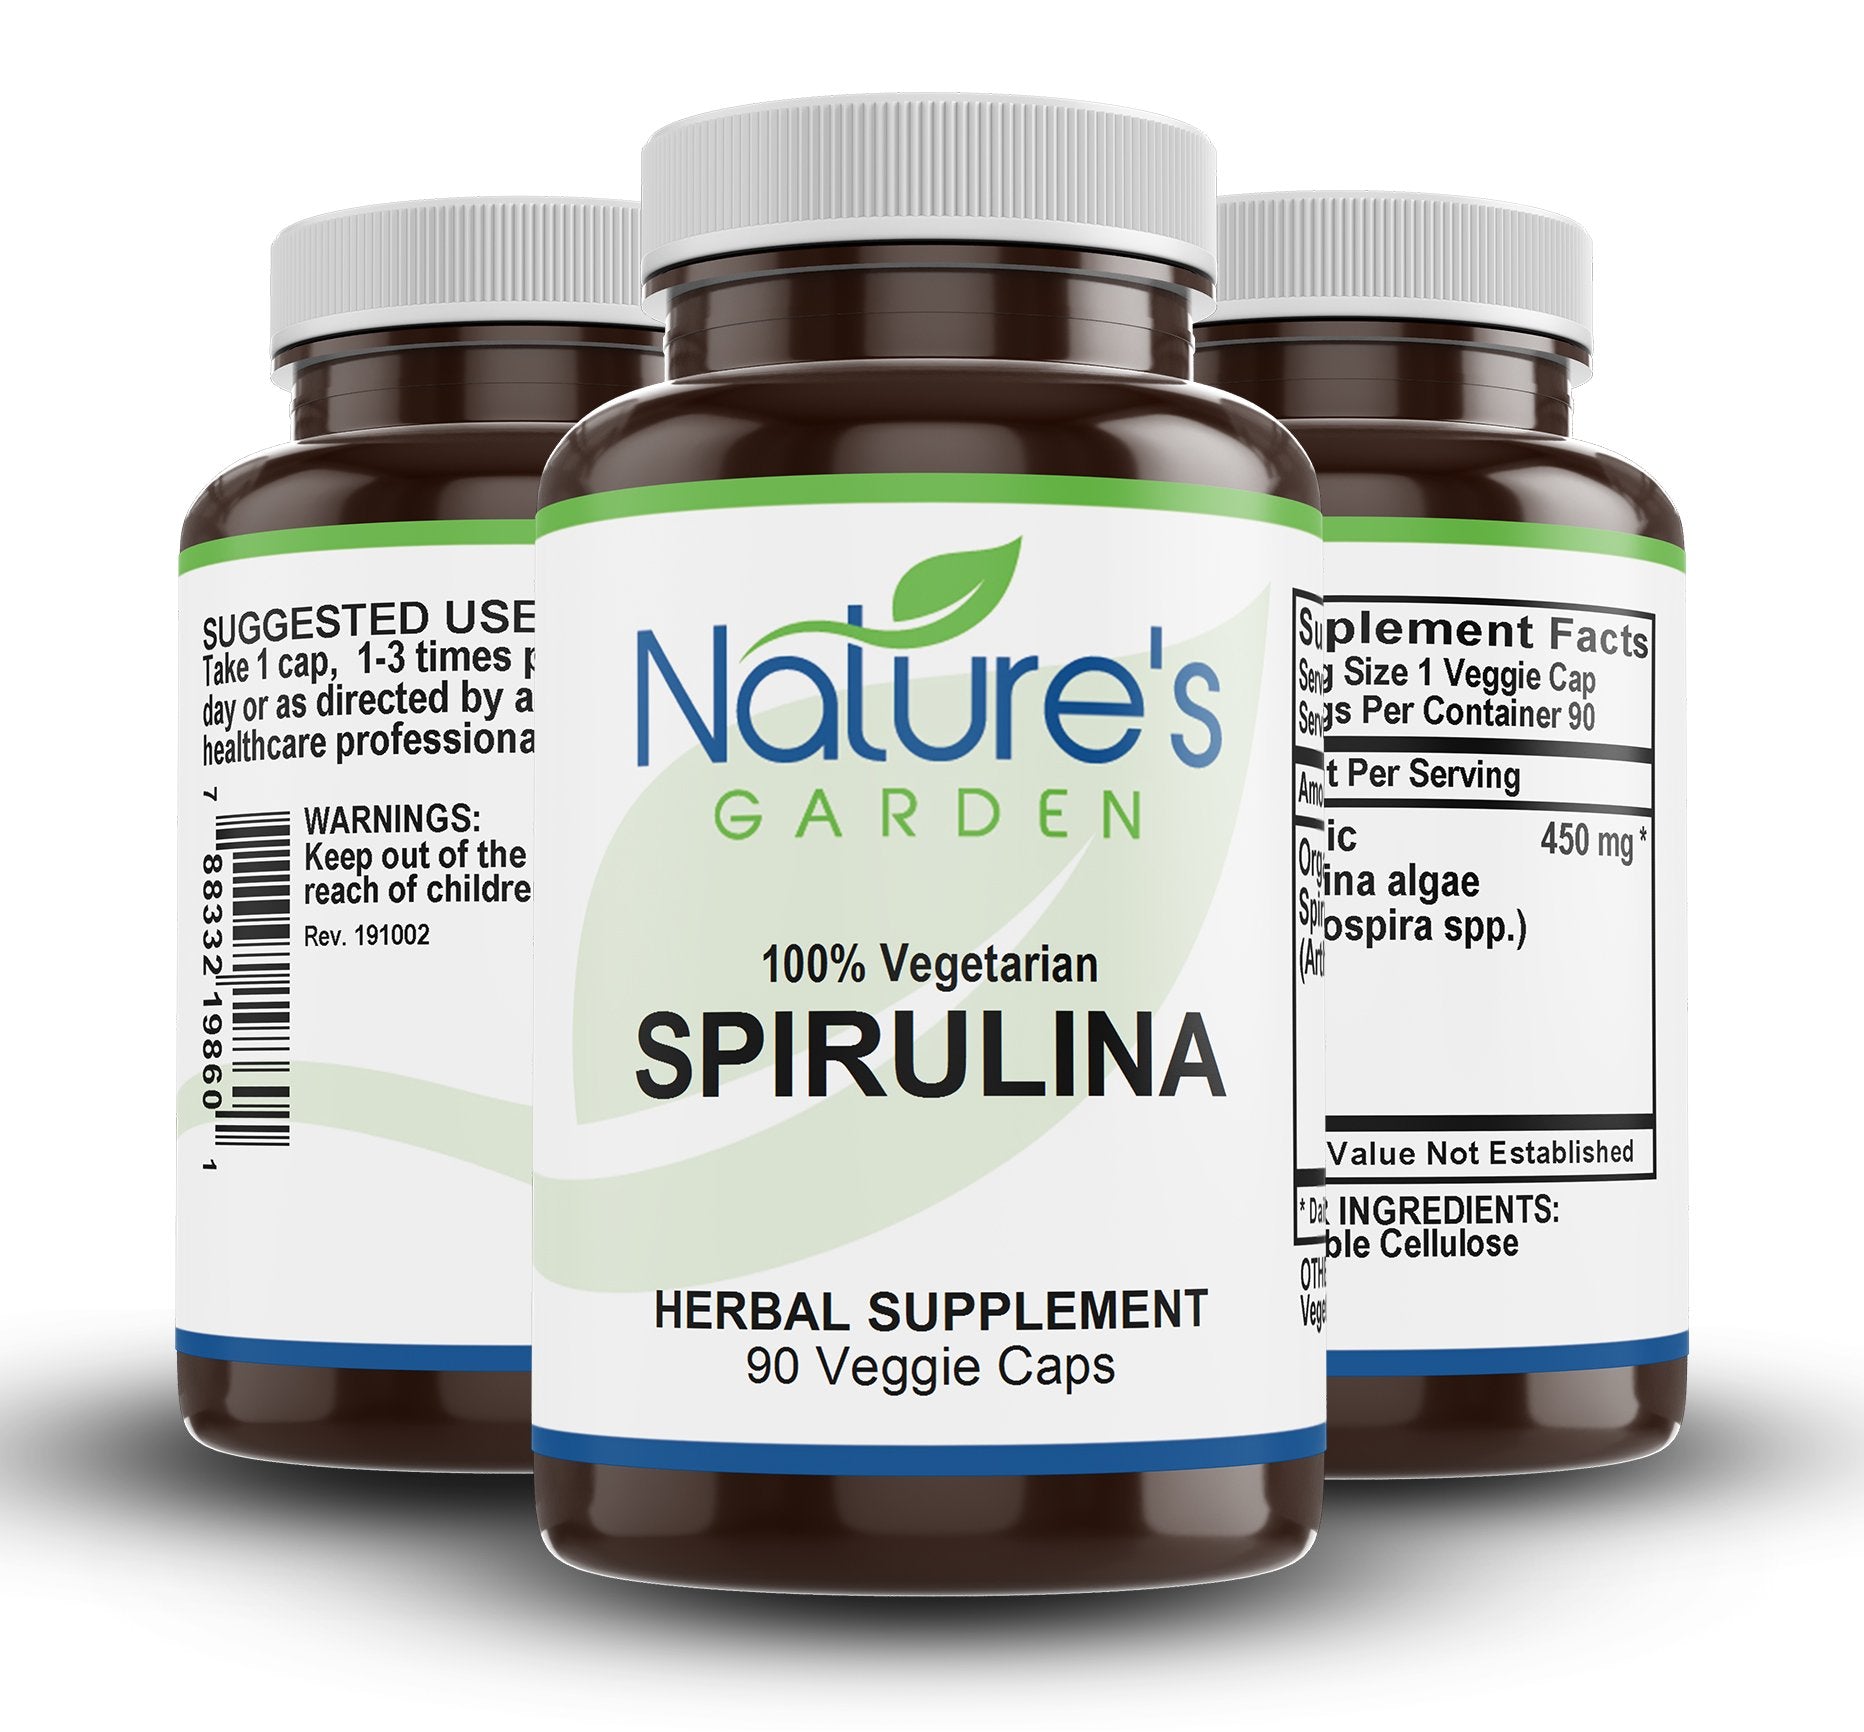 Spirulina - 90 Veggie Caps with 450mg Organic Spirulina Powder - Nature's Superfood Supplement